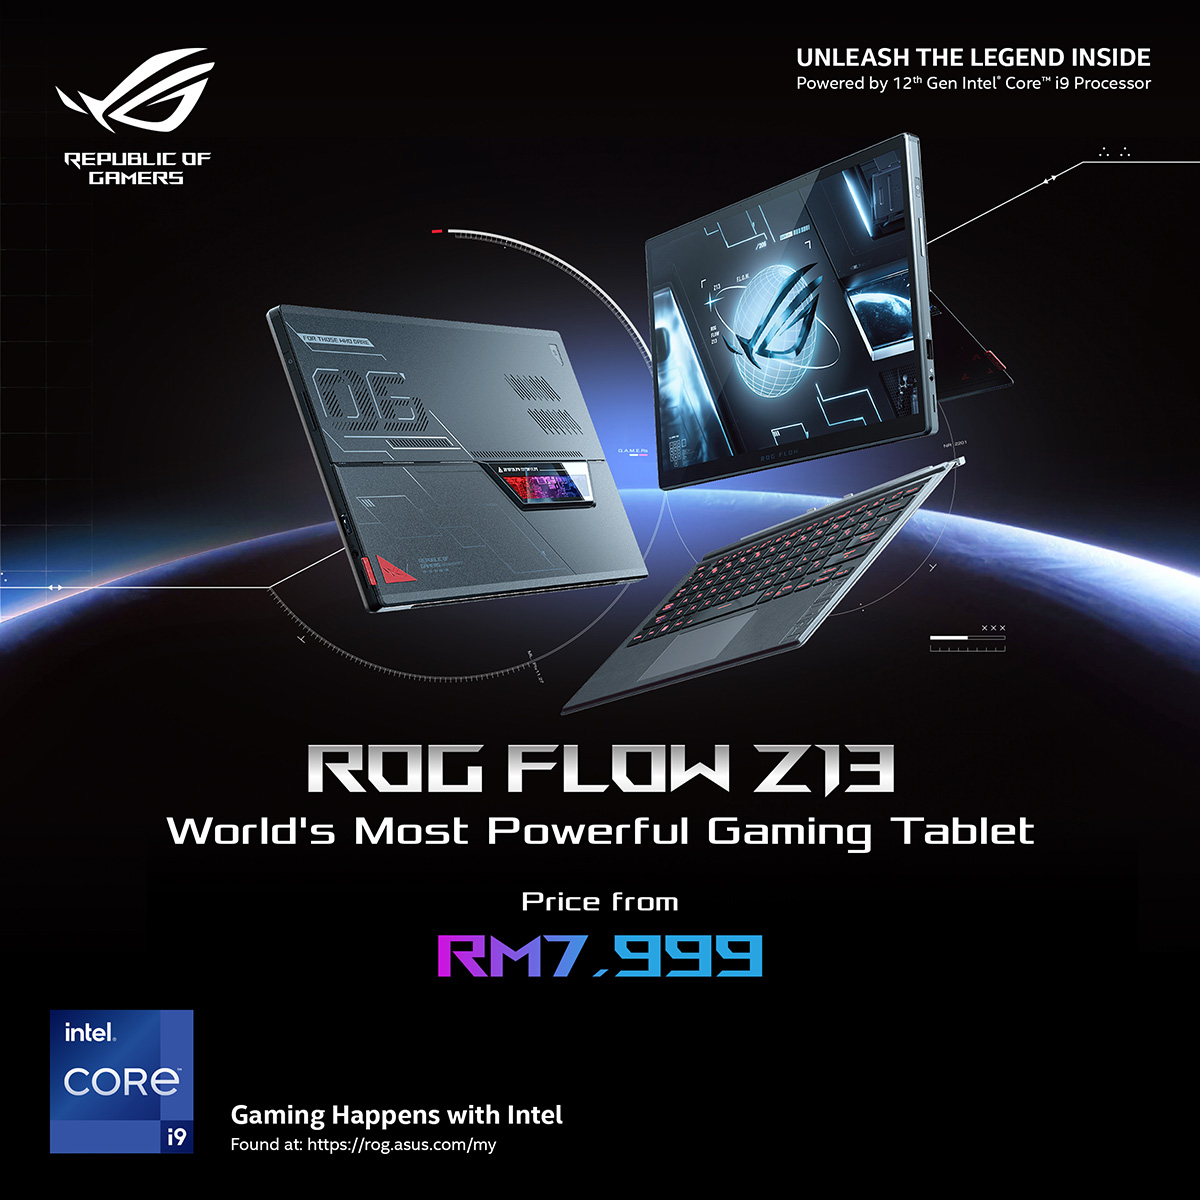 ROG Flow Z13 prices